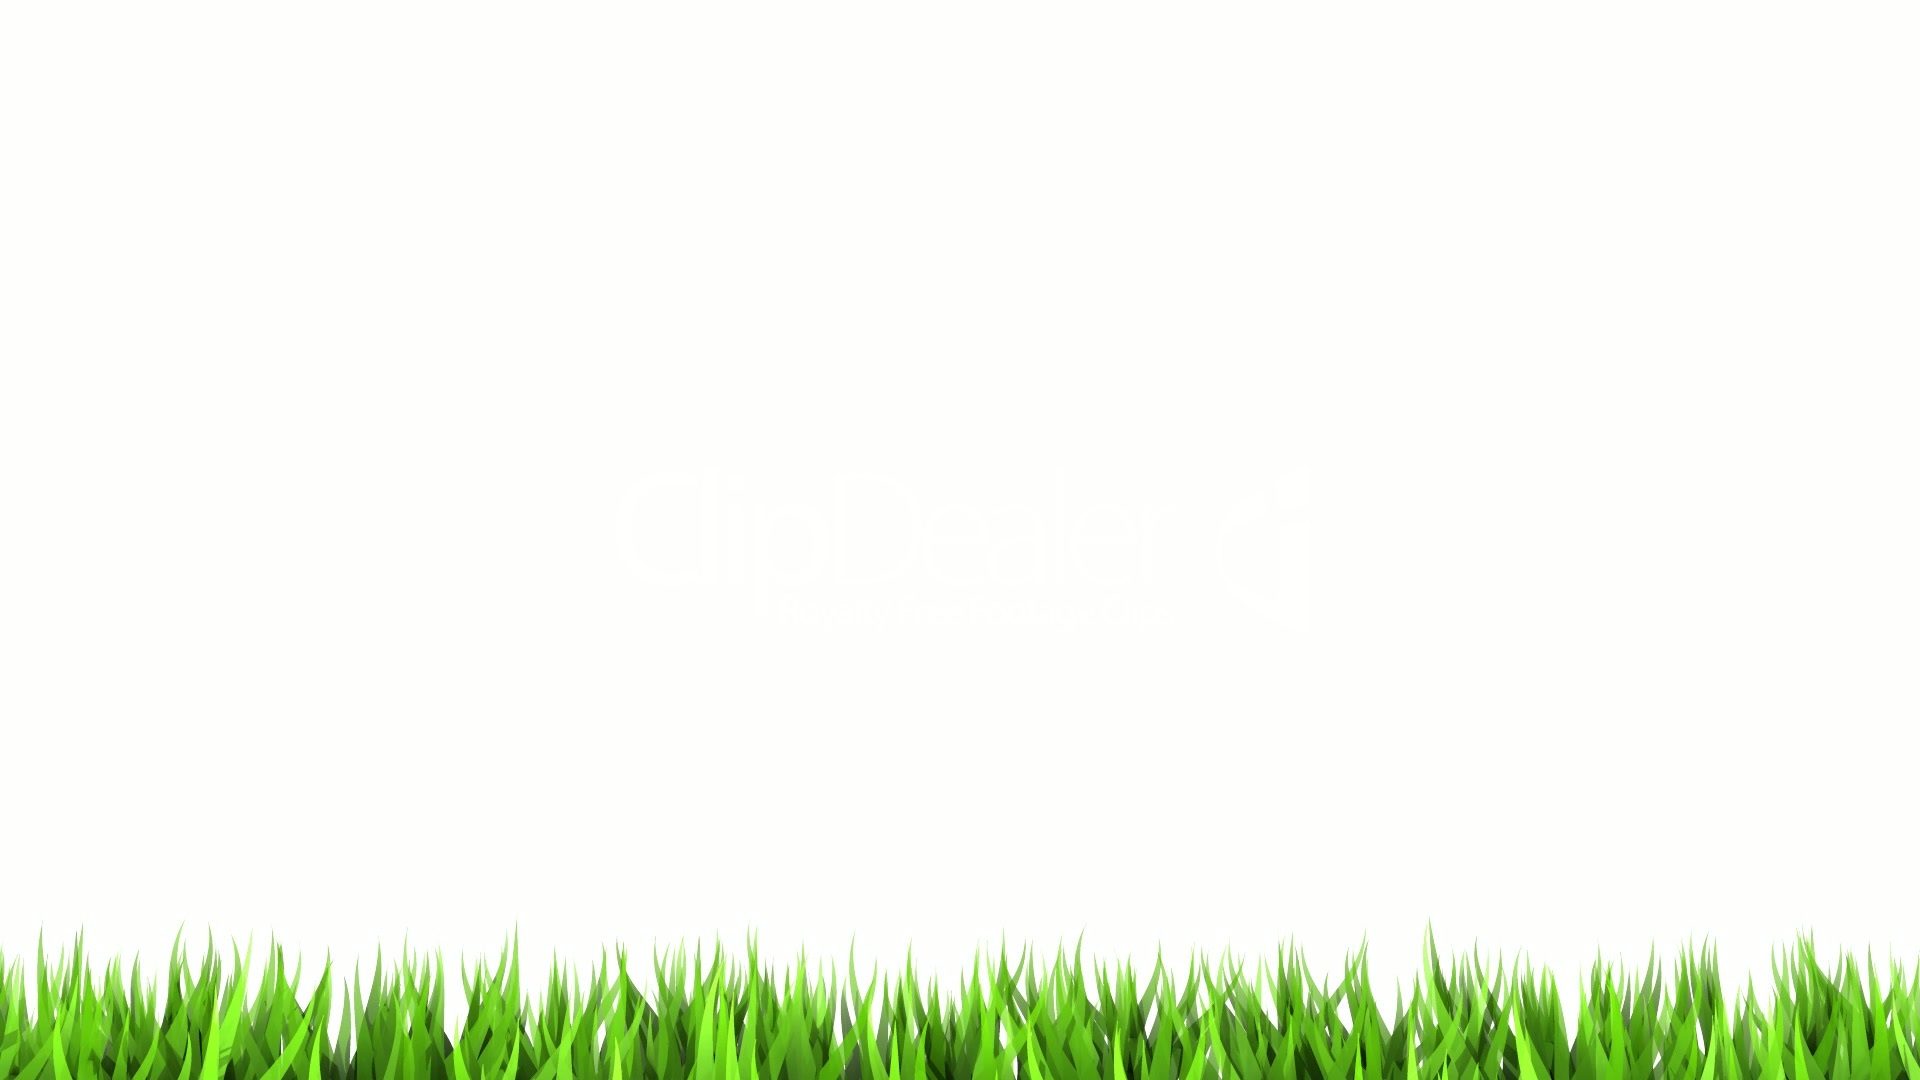 white colour wallpaper,grass,green,lawn,plant,artificial turf